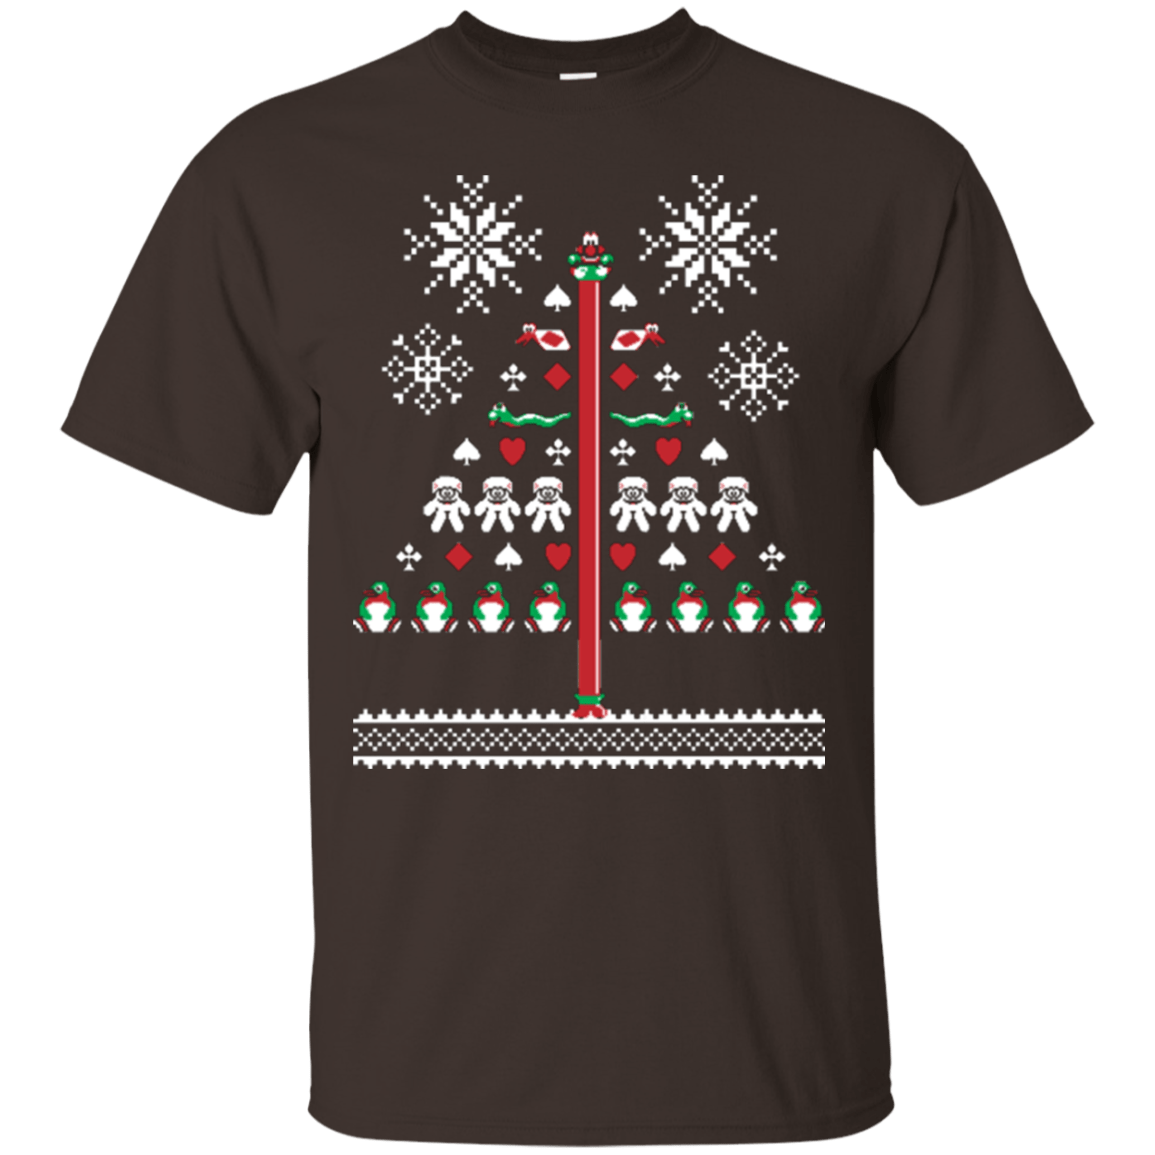 T-Shirts Dark Chocolate / Small Operation Christmas Cod T-Shirt